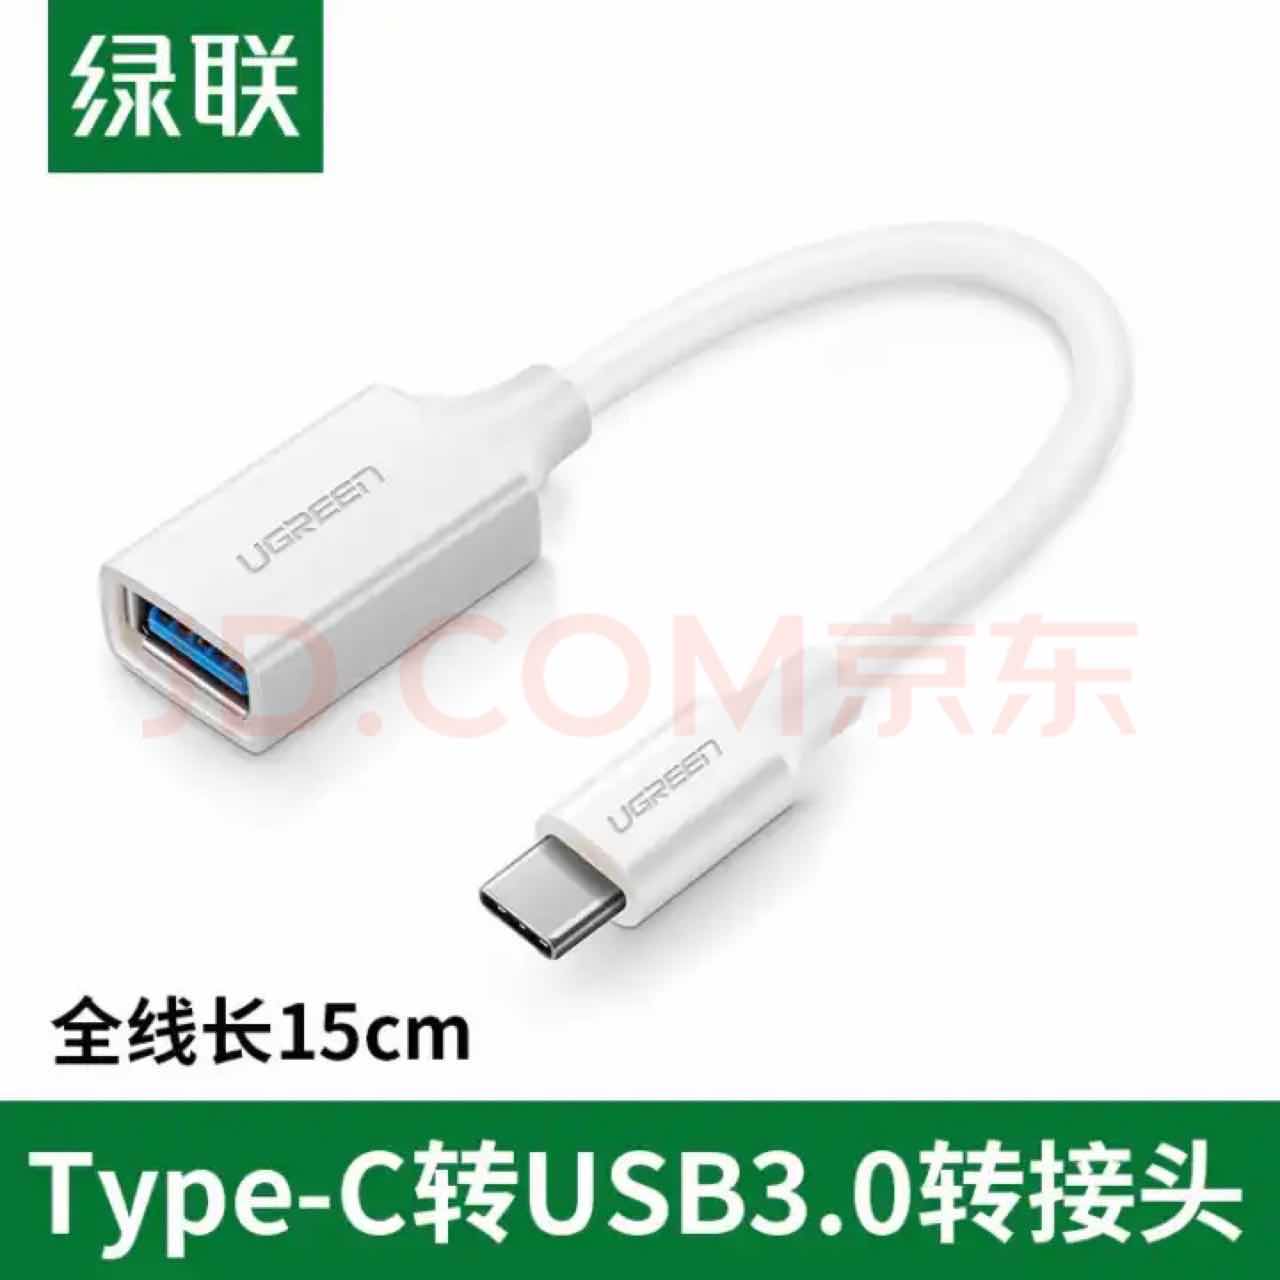 绿联 Type-C公转USB3.0母 OTG数据线 线长15cm白色	